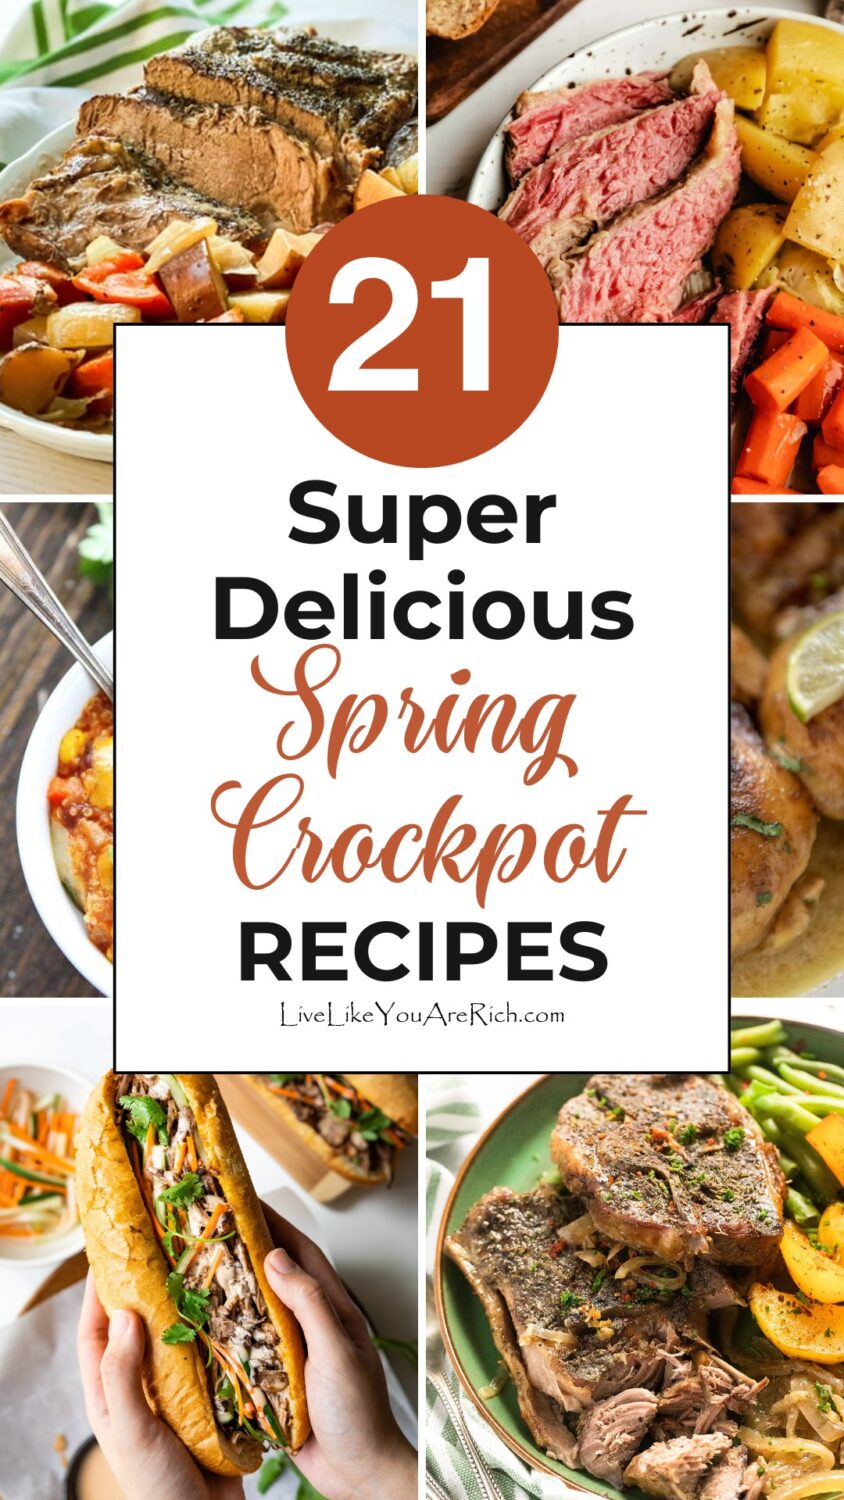 21 Super Delicious Spring Crockpot Recipes